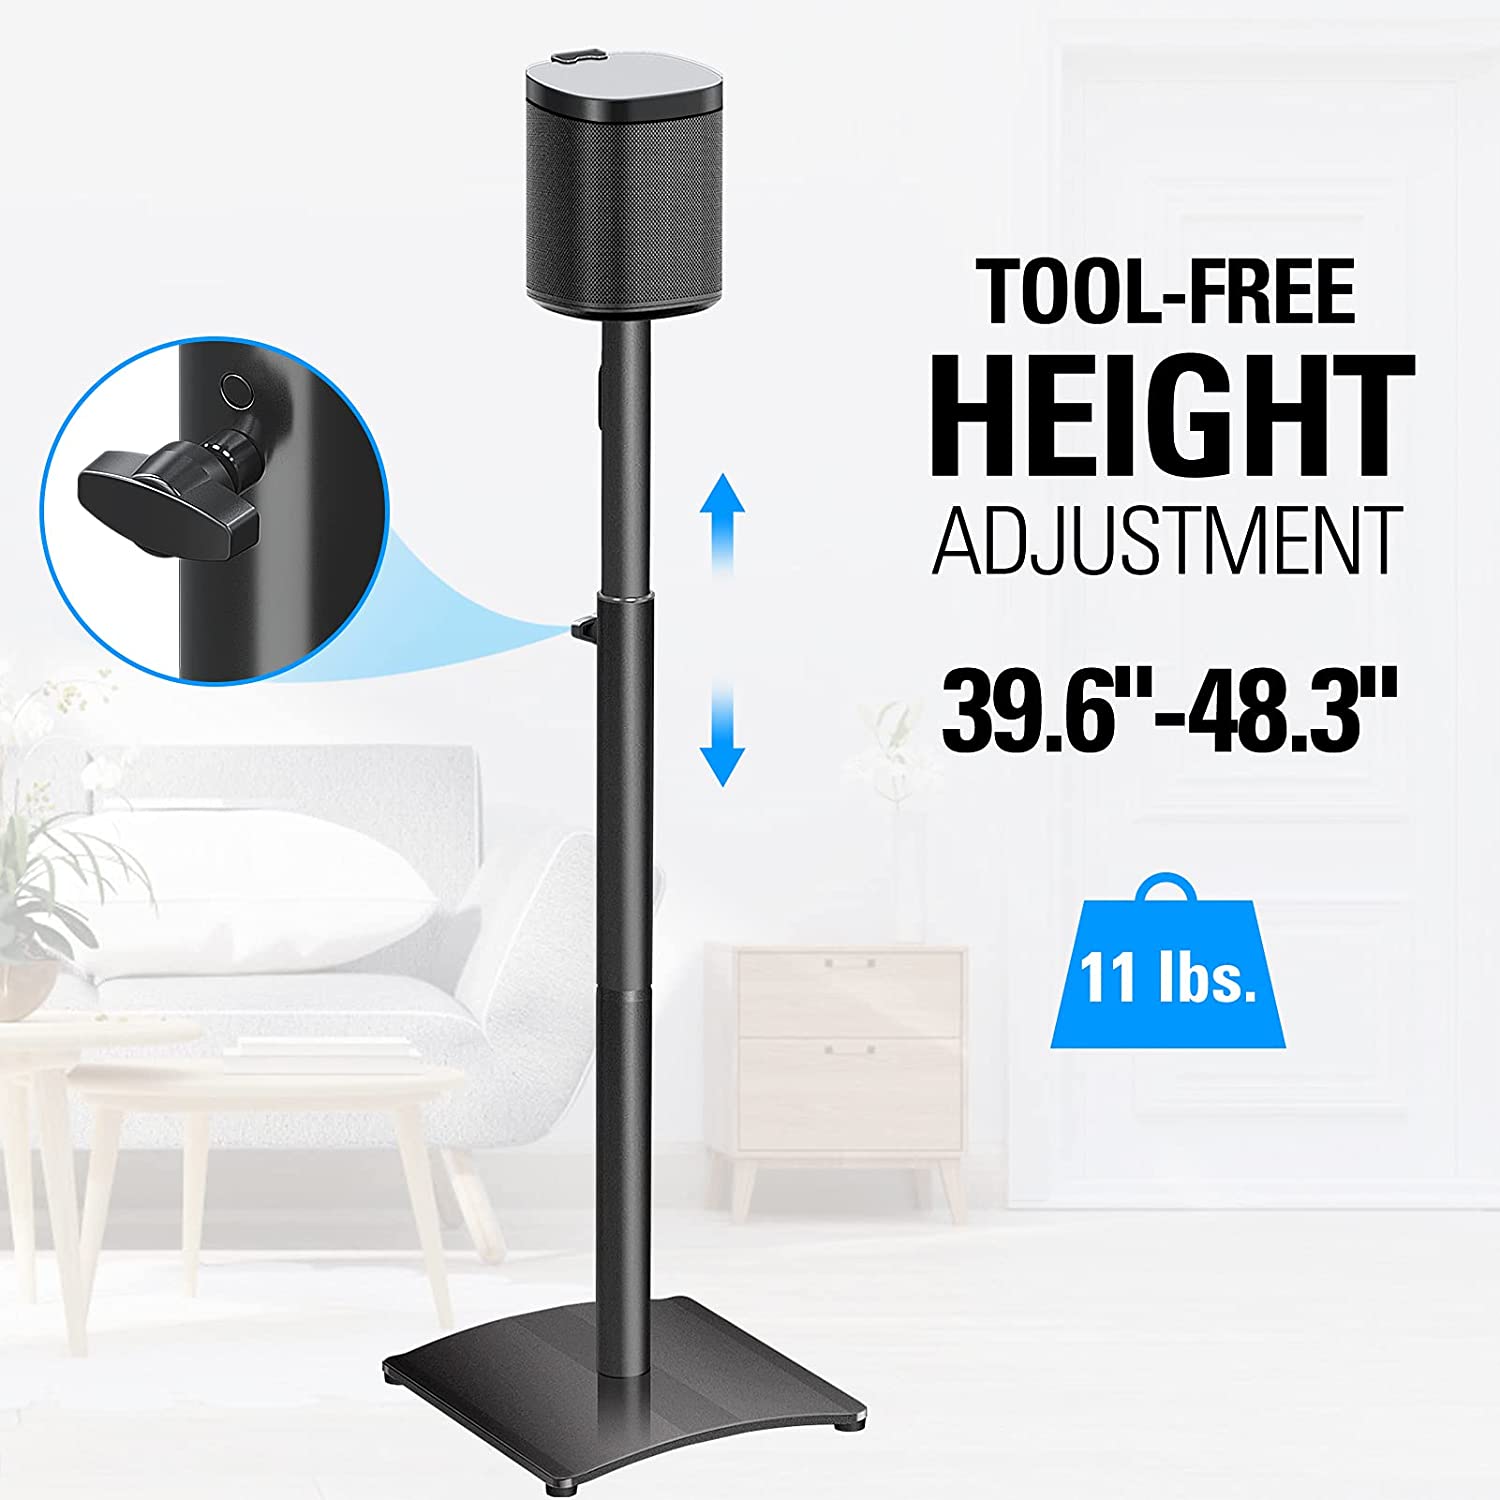 2 tool-free height adjustable speaker stands